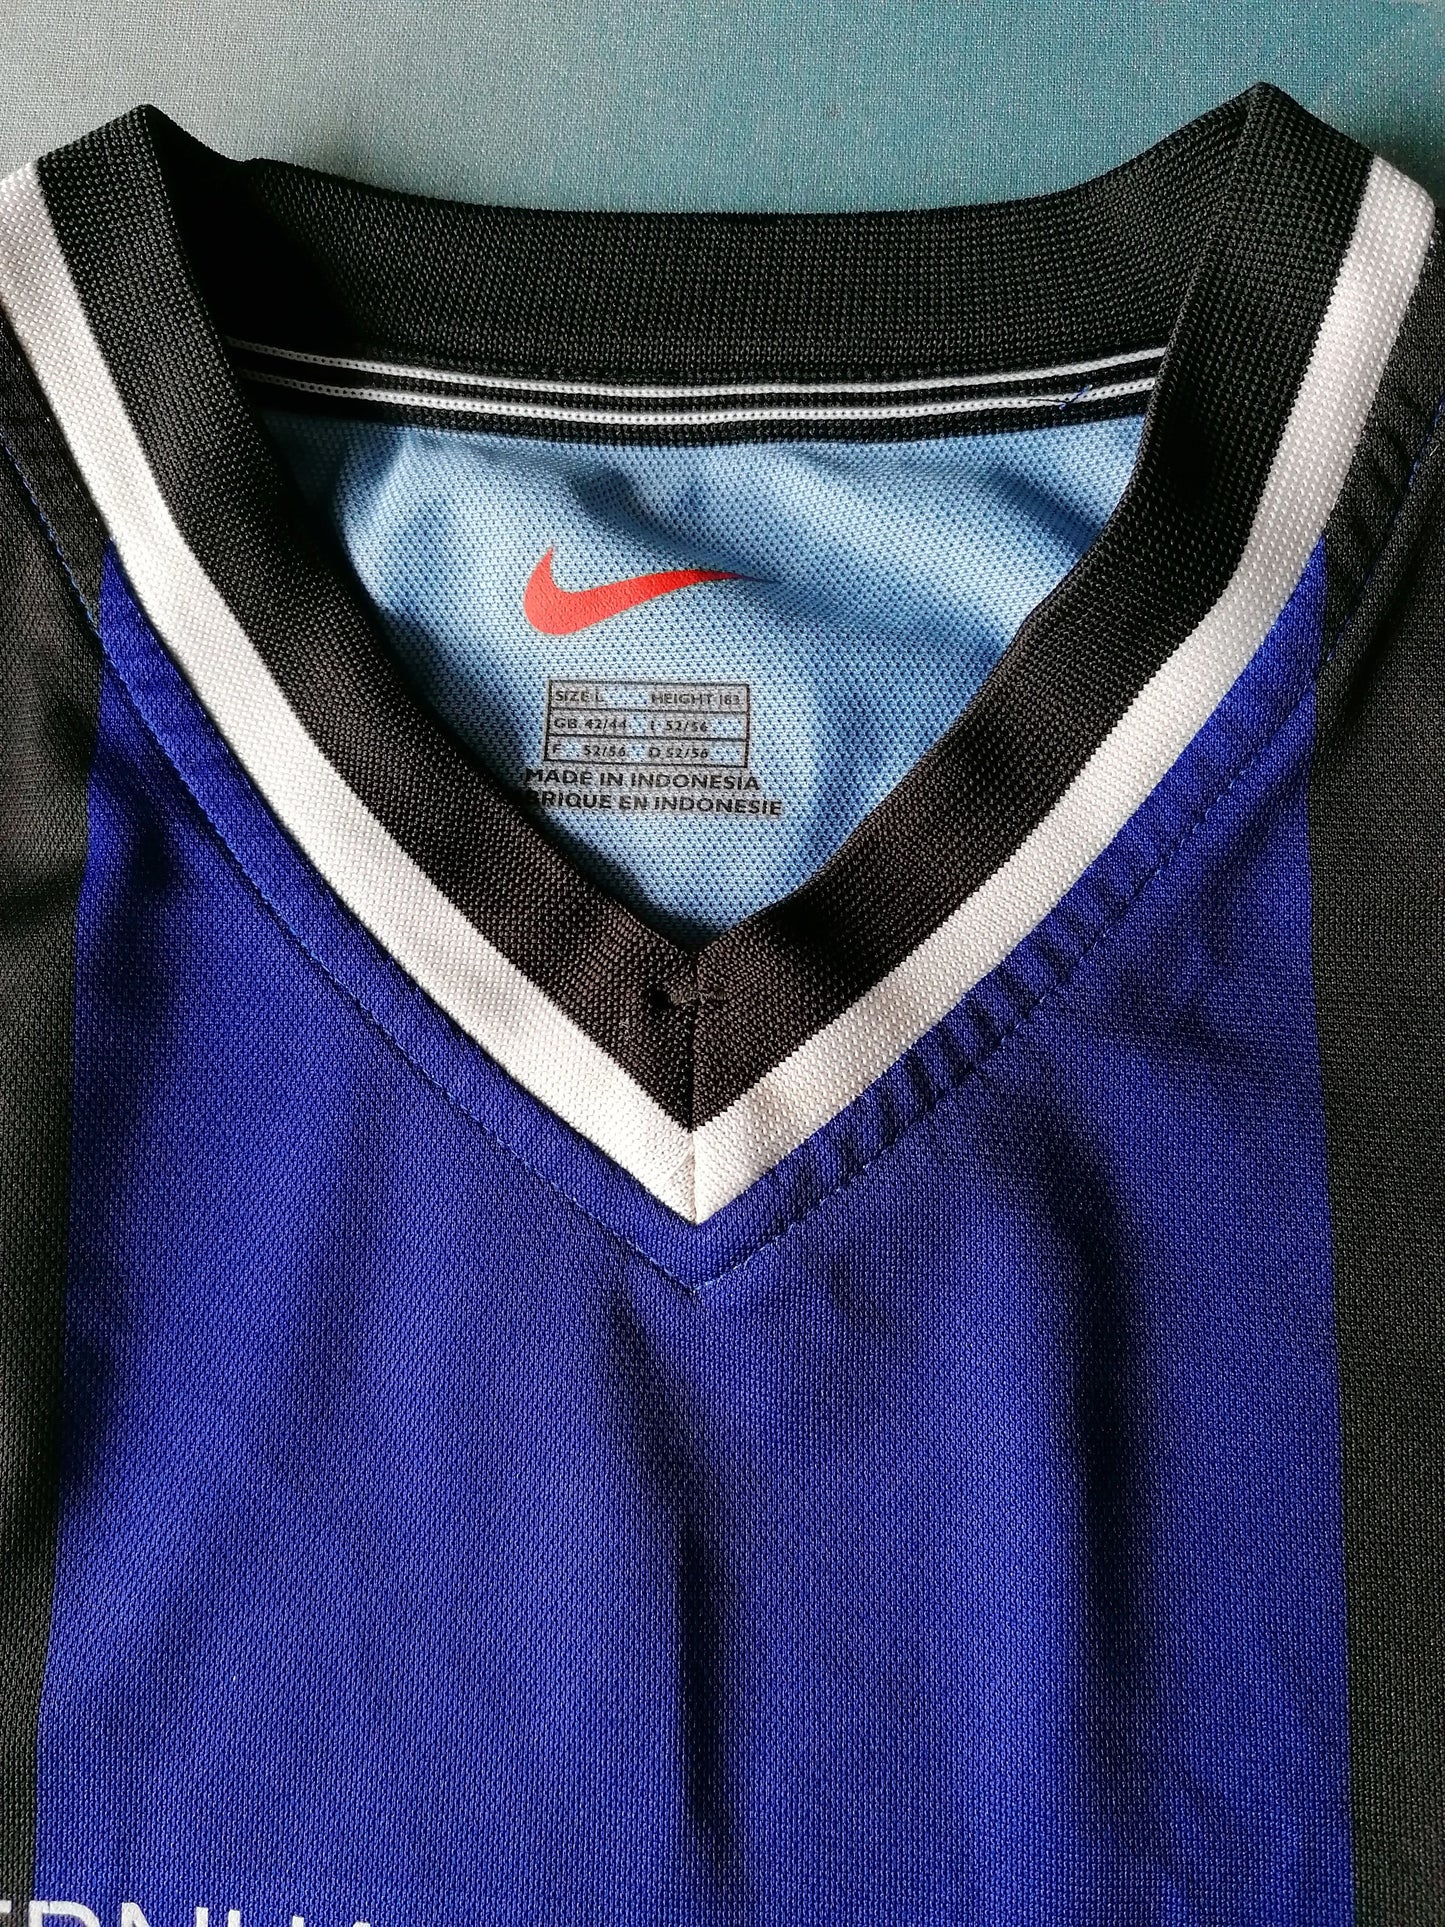 Nike Duitsland "Tus Ergenzingen" sport voetbal shirt lange mouw. Blauw Zwart. Maat L.